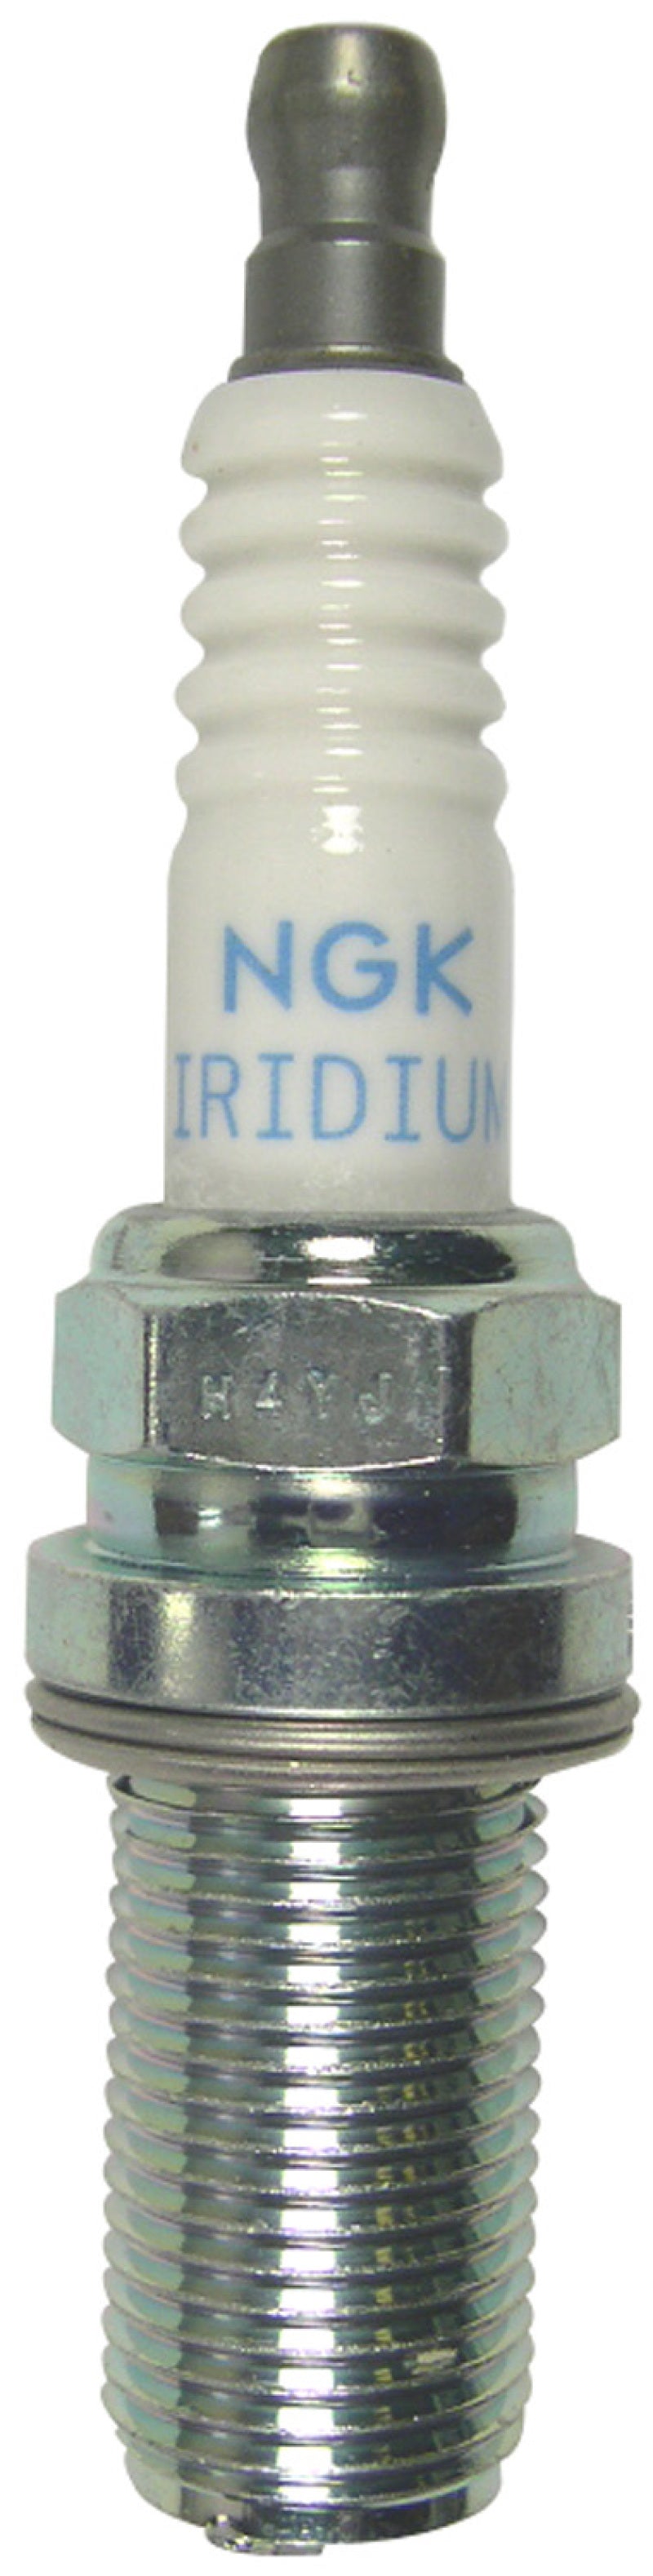 NGK Iridium Racing Spark Plug Box of 4 (R7438-8).